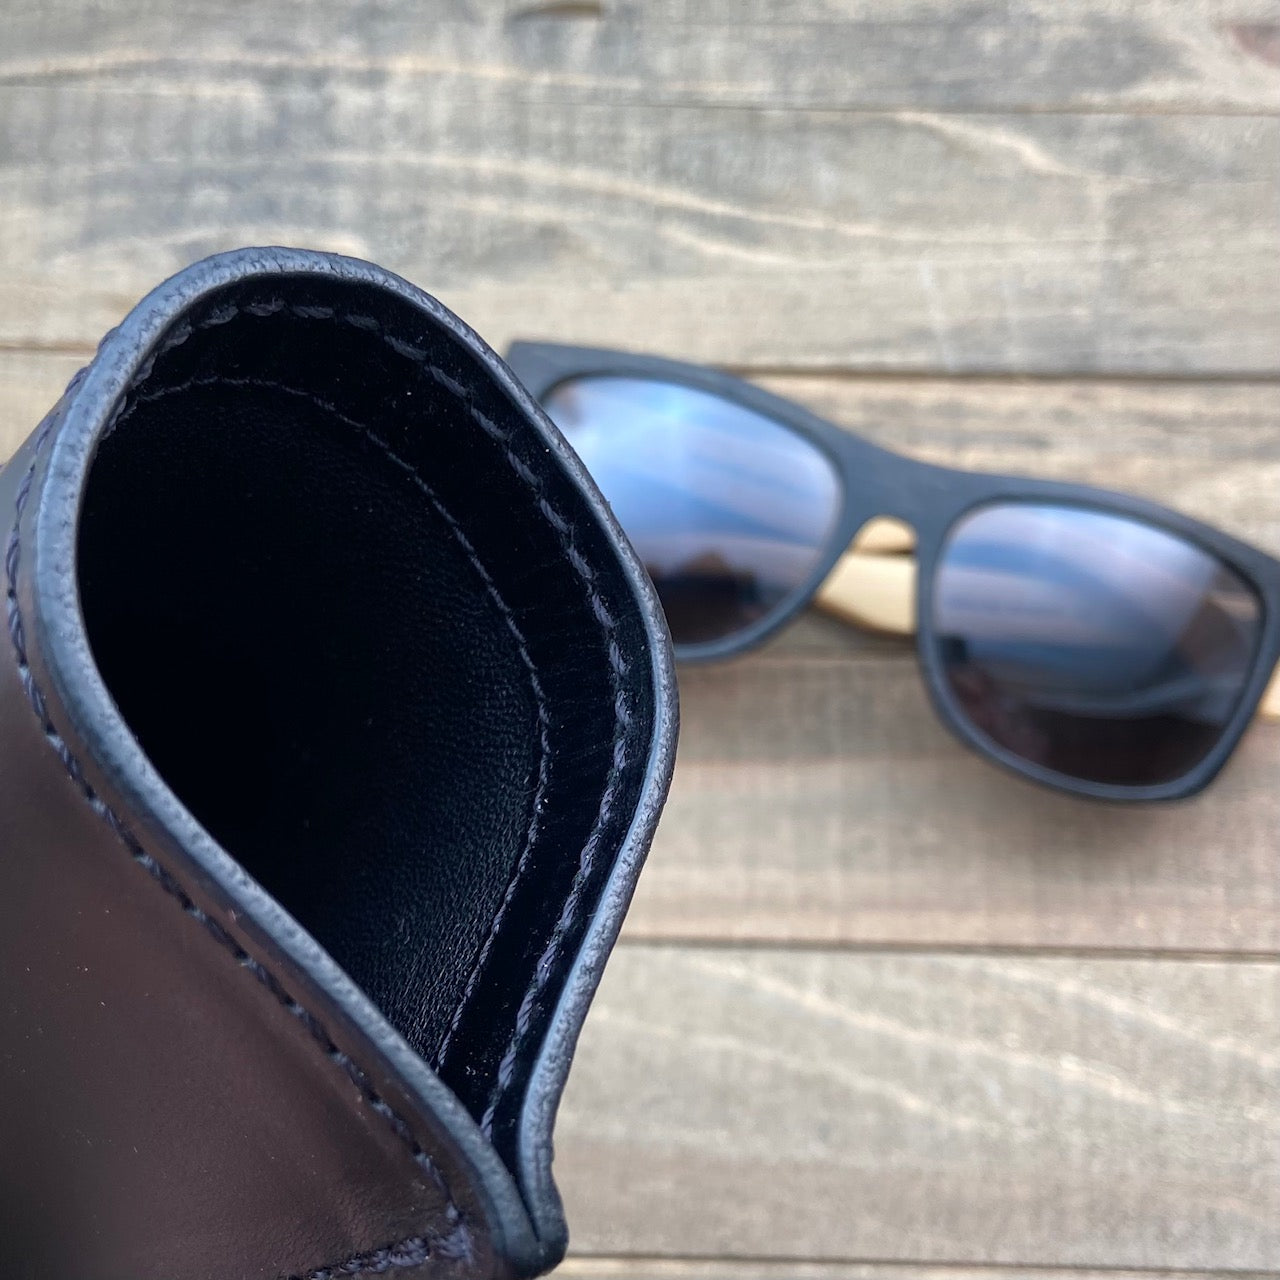 Black Oxford Sunglasses Case, Lined in Calfskin